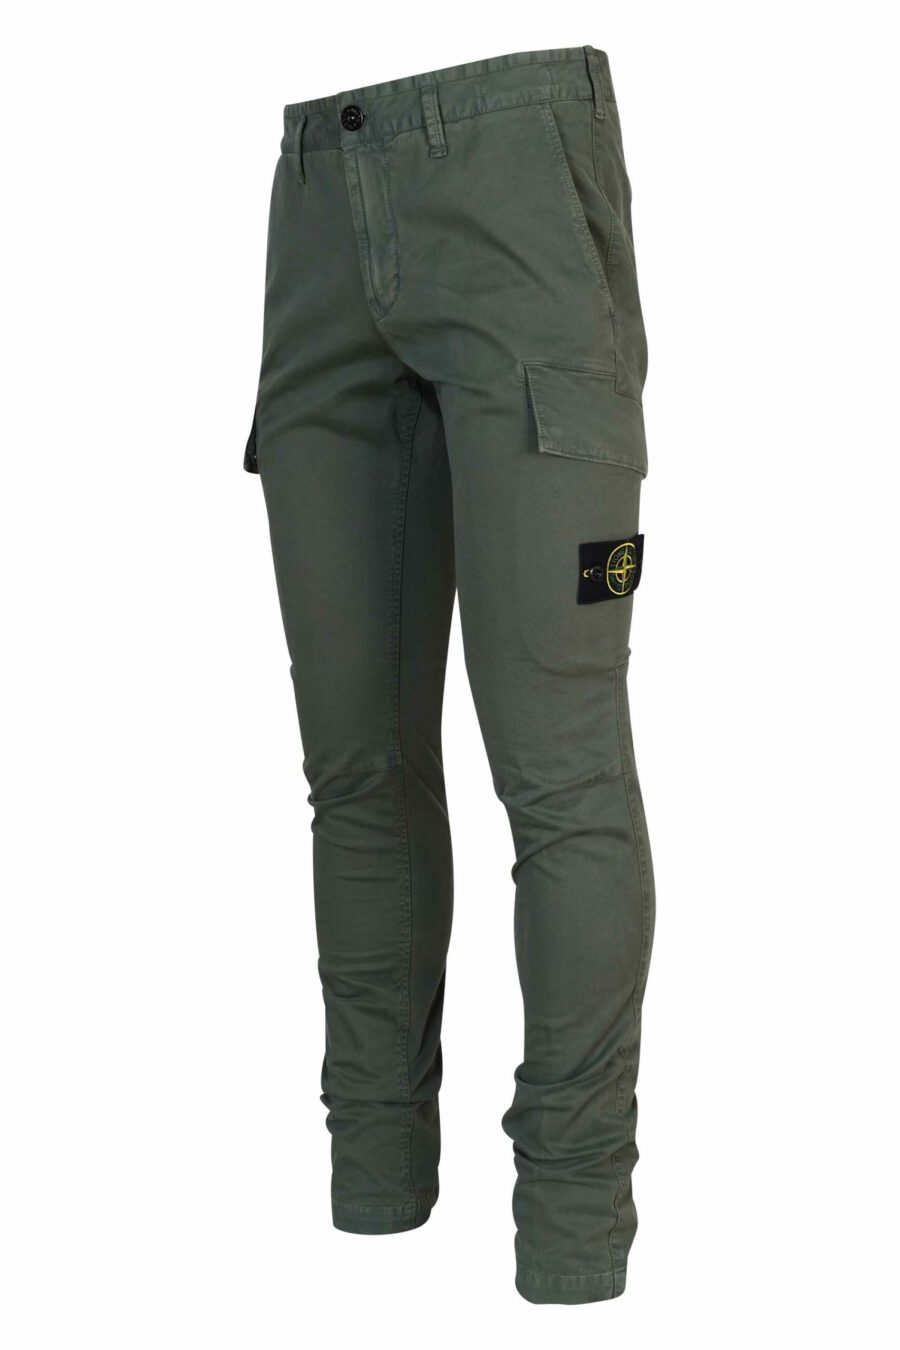 Pantalón verde militar "skinny" estilo cargo con logo parche brújula - 8052572930263 1 scaled